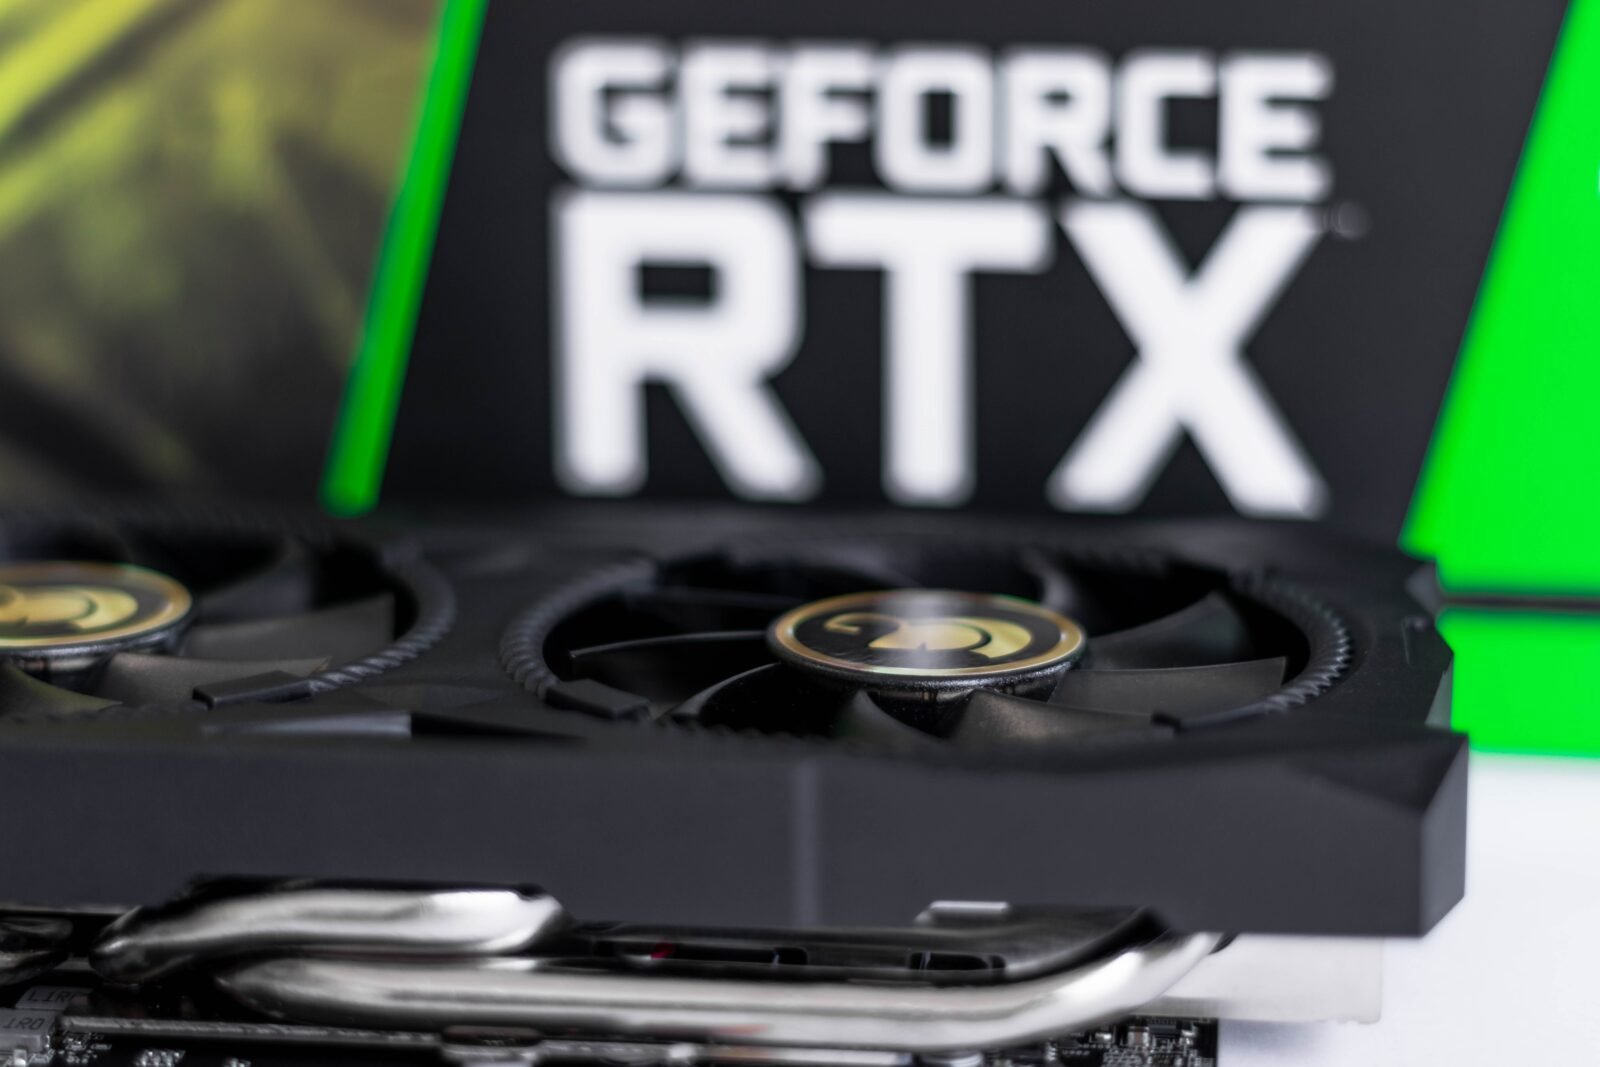 Nvidia GeForce RTX 3070